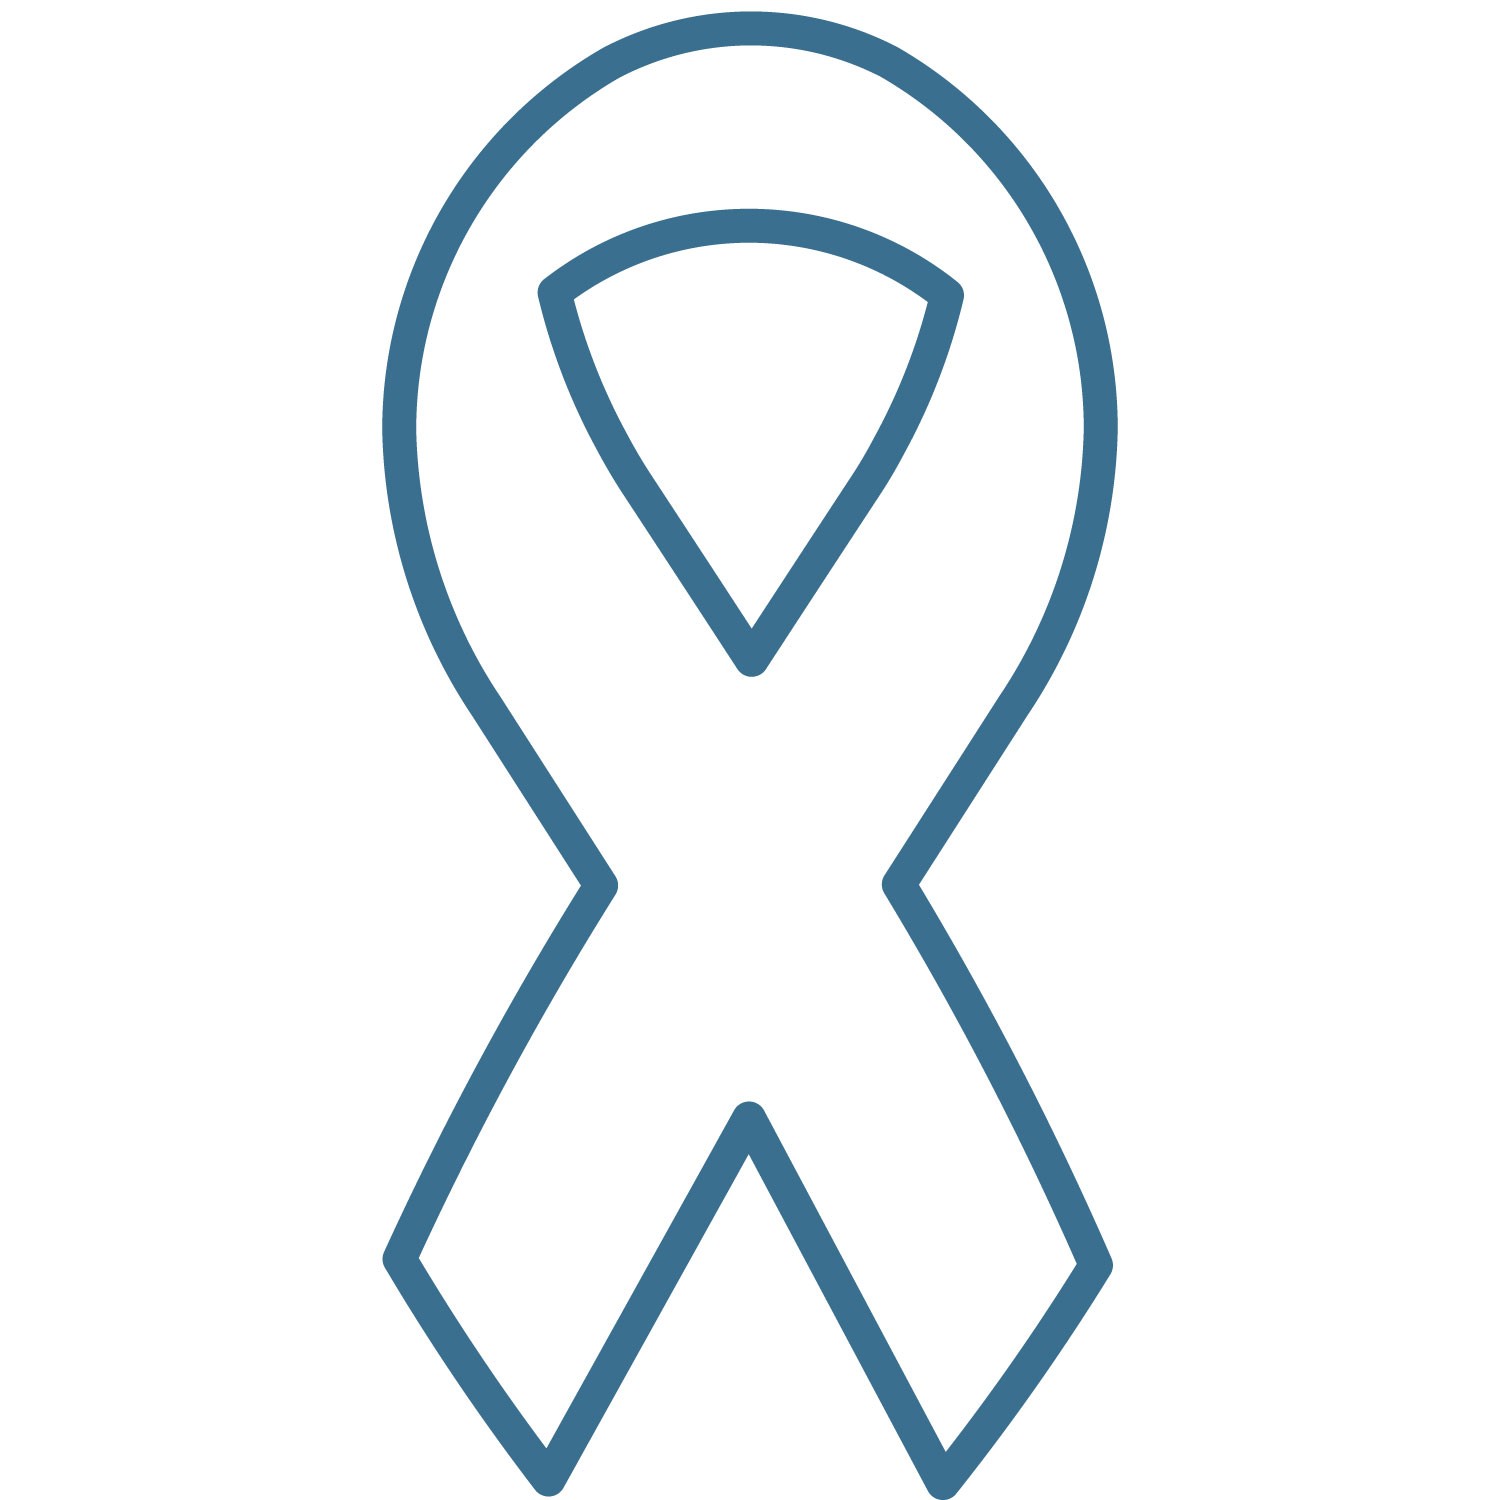 ... Cancer Awareness Ribbons 